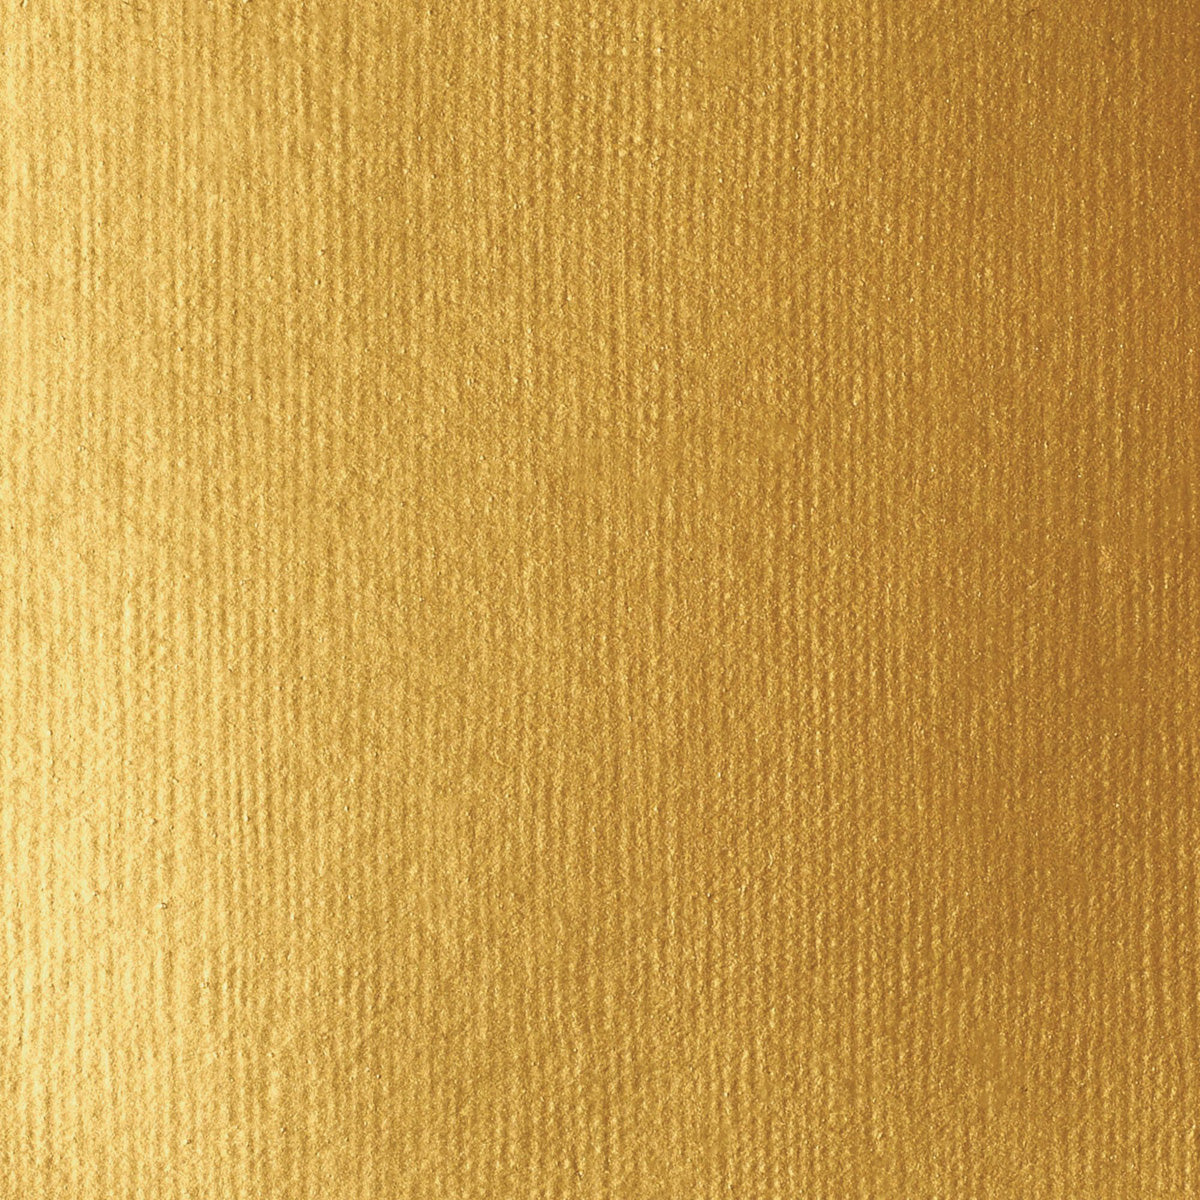 Liqitex Basics Fluid Acryl 118ml - Gold S2